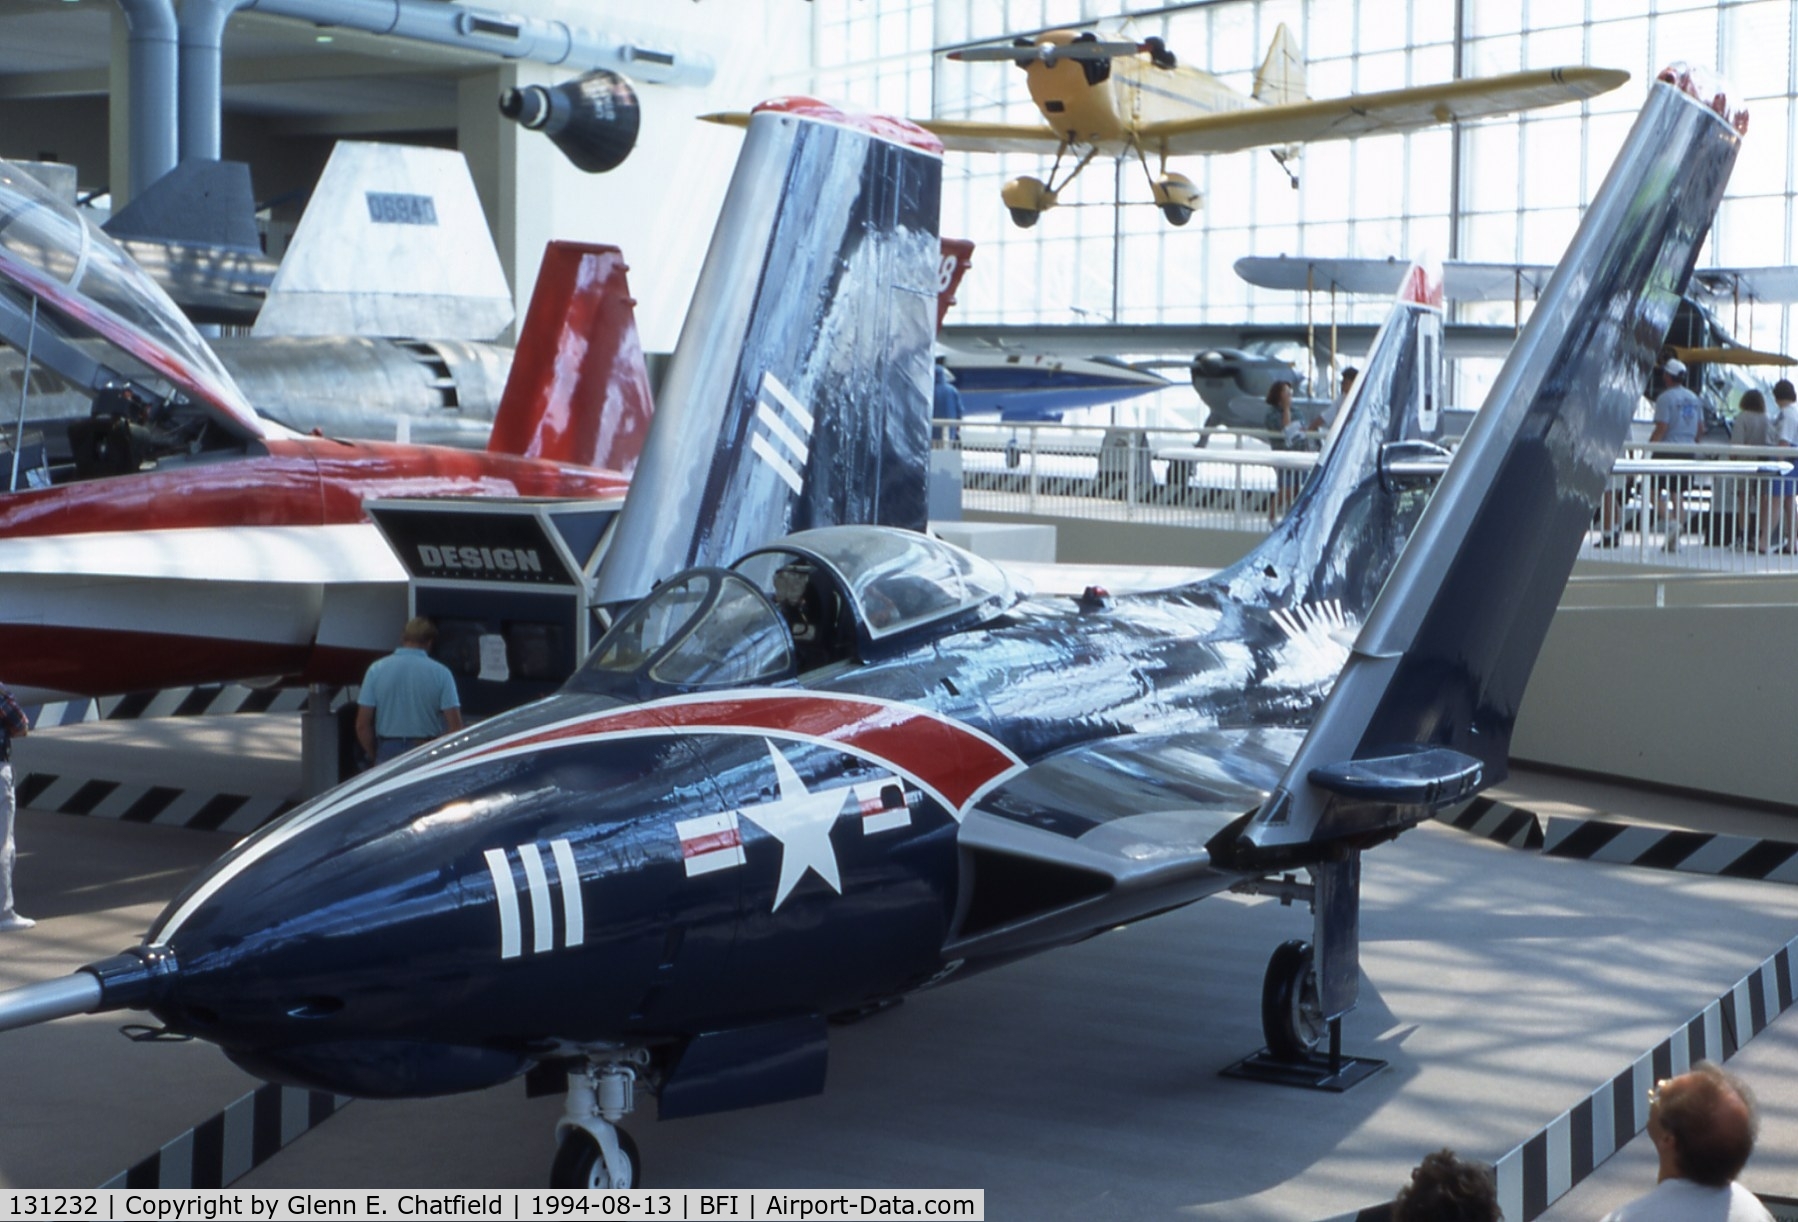 131232, 1954 Grumman F9F-8 (F9-J) Cougar C/N Not found 131232, F9F-8/F-9J at the Boeing Museum of Flight